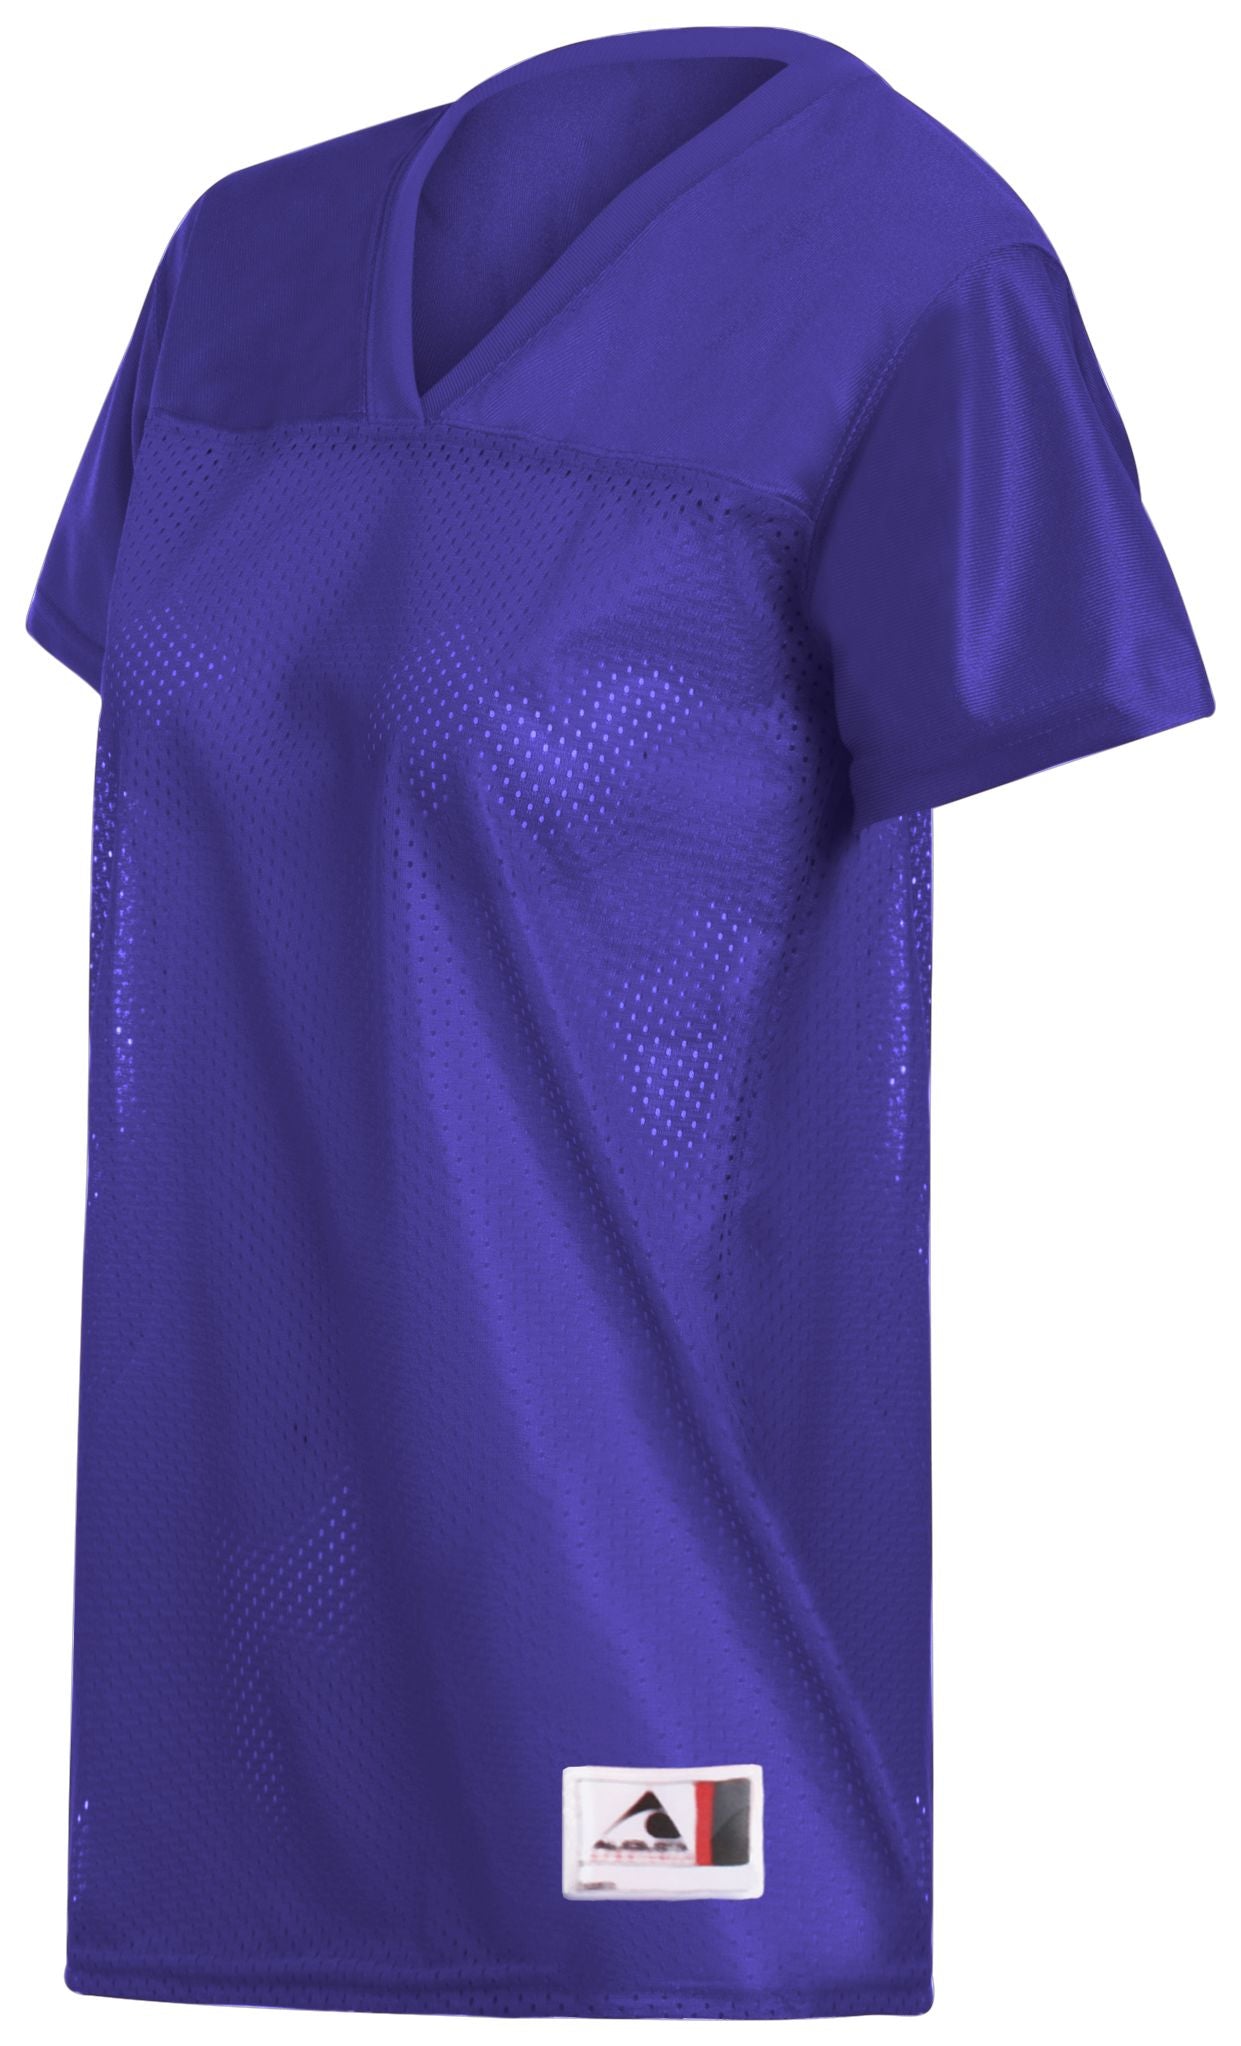 Augusta Sportswear Ladies Replica Football Tee in Purple  -Part of the Ladies, Ladies-Jersey, Augusta-Products, Football, Shirts, All-Sports, All-Sports-1 product lines at KanaleyCreations.com